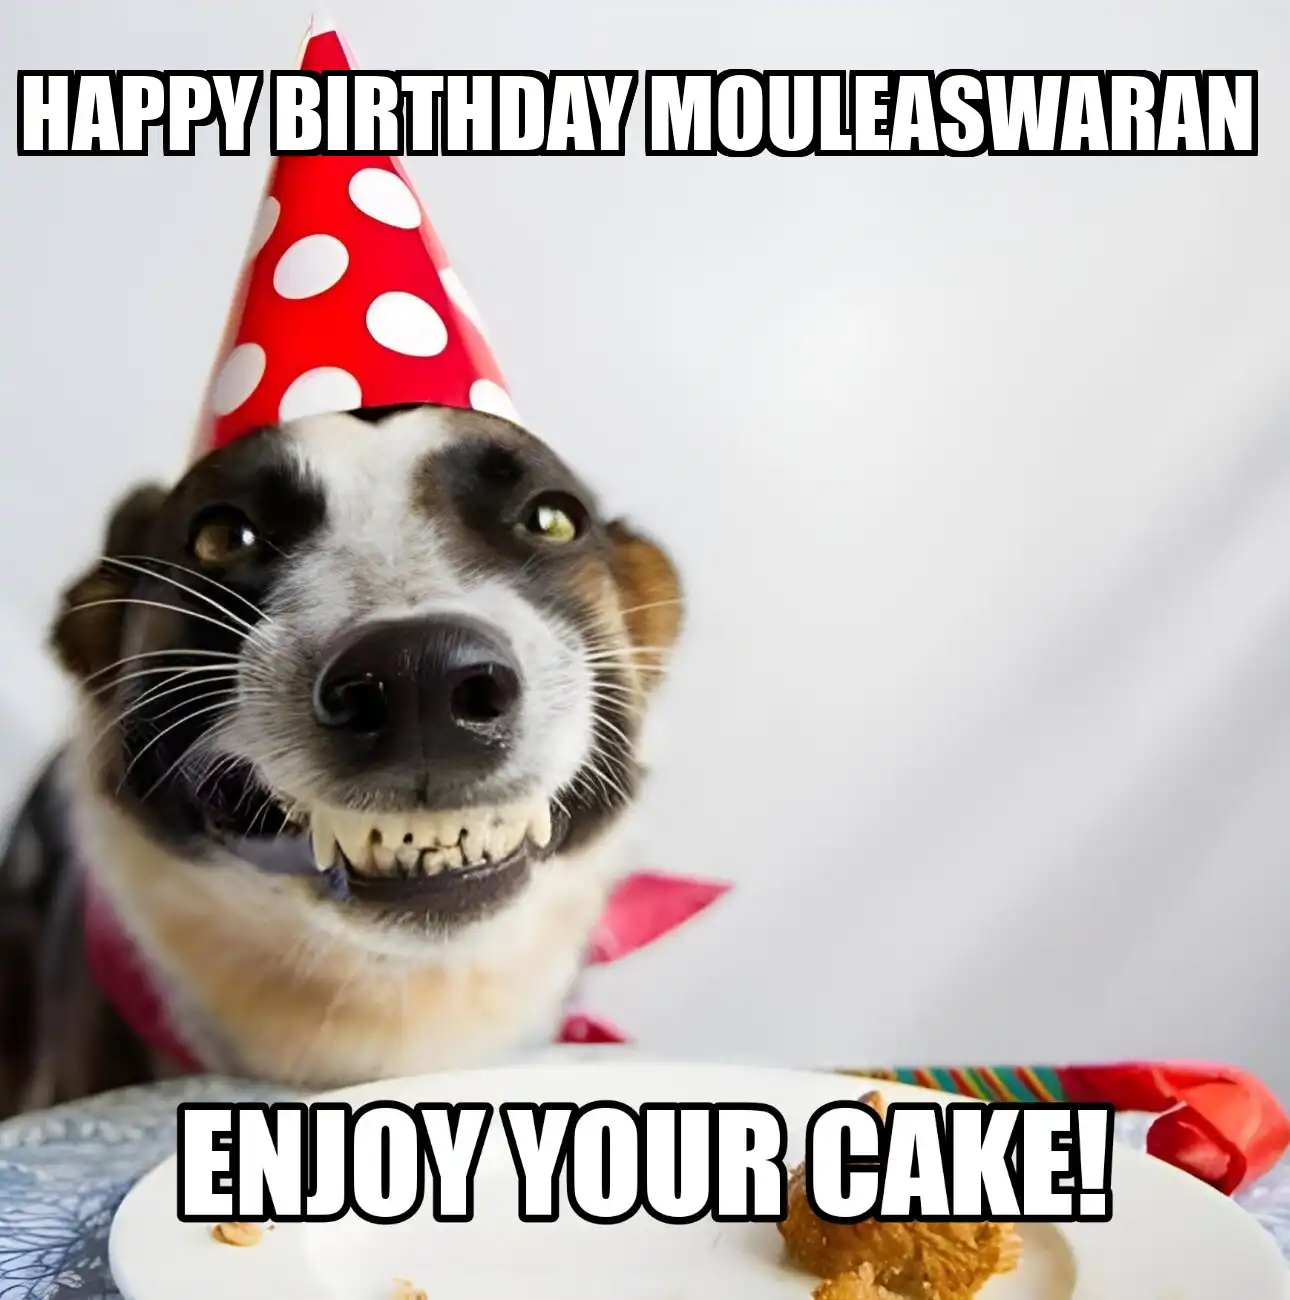 Happy Birthday Mouleaswaran Enjoy Your Cake Dog Meme